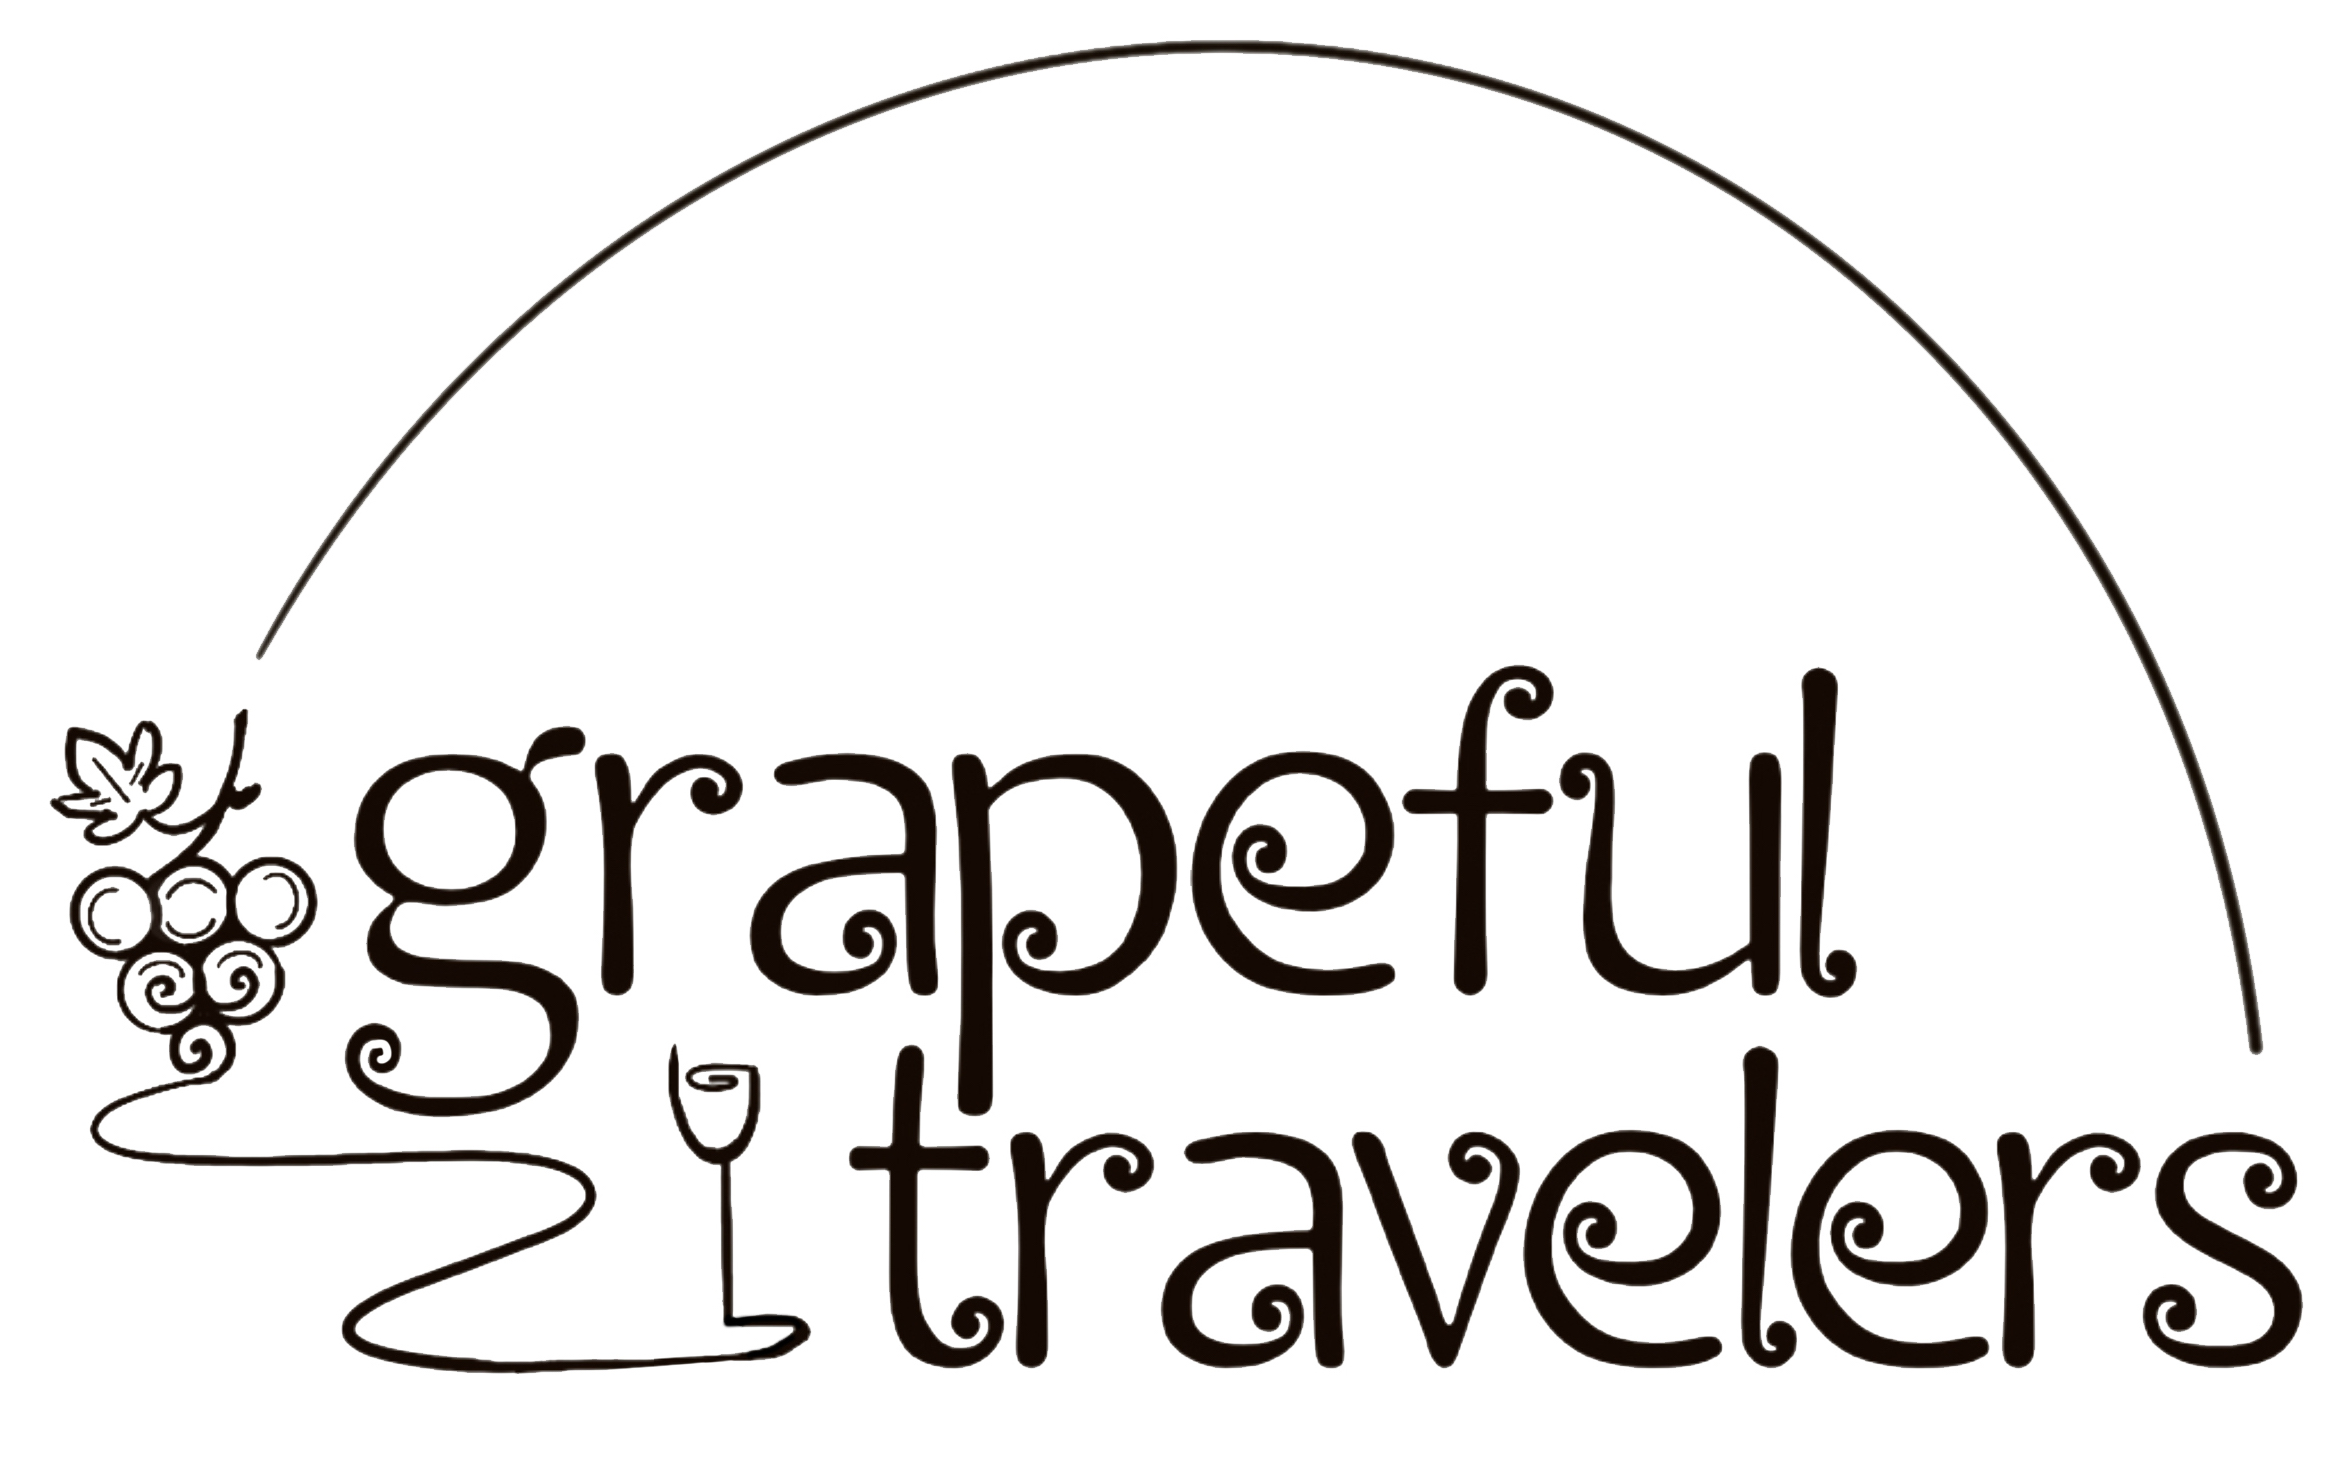 Grapeful Travelers